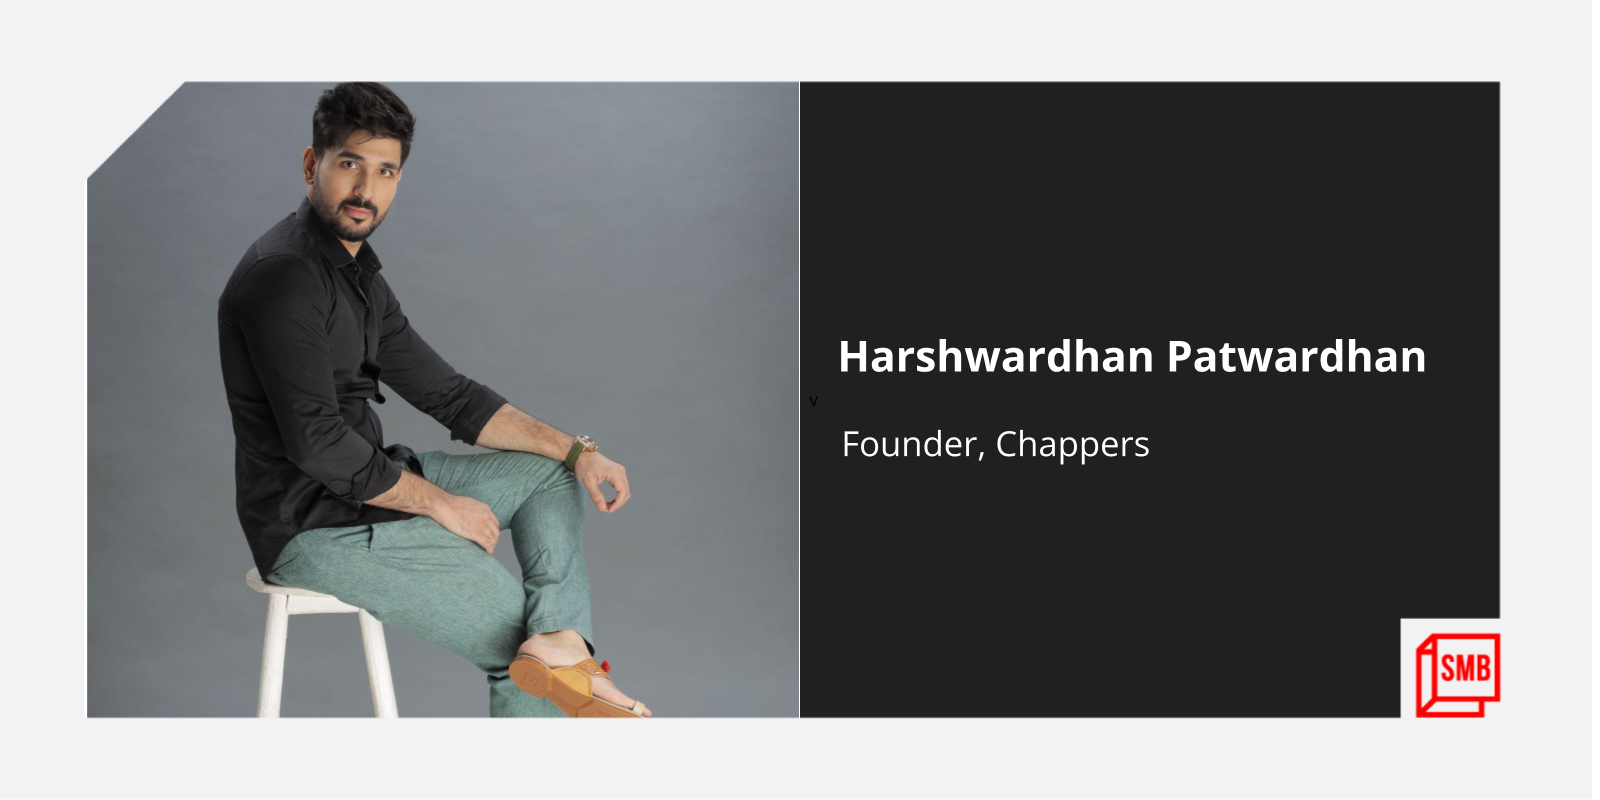 Taking Kolhapuri chappals global: meet the entrepreneur offering customised footwear through tech